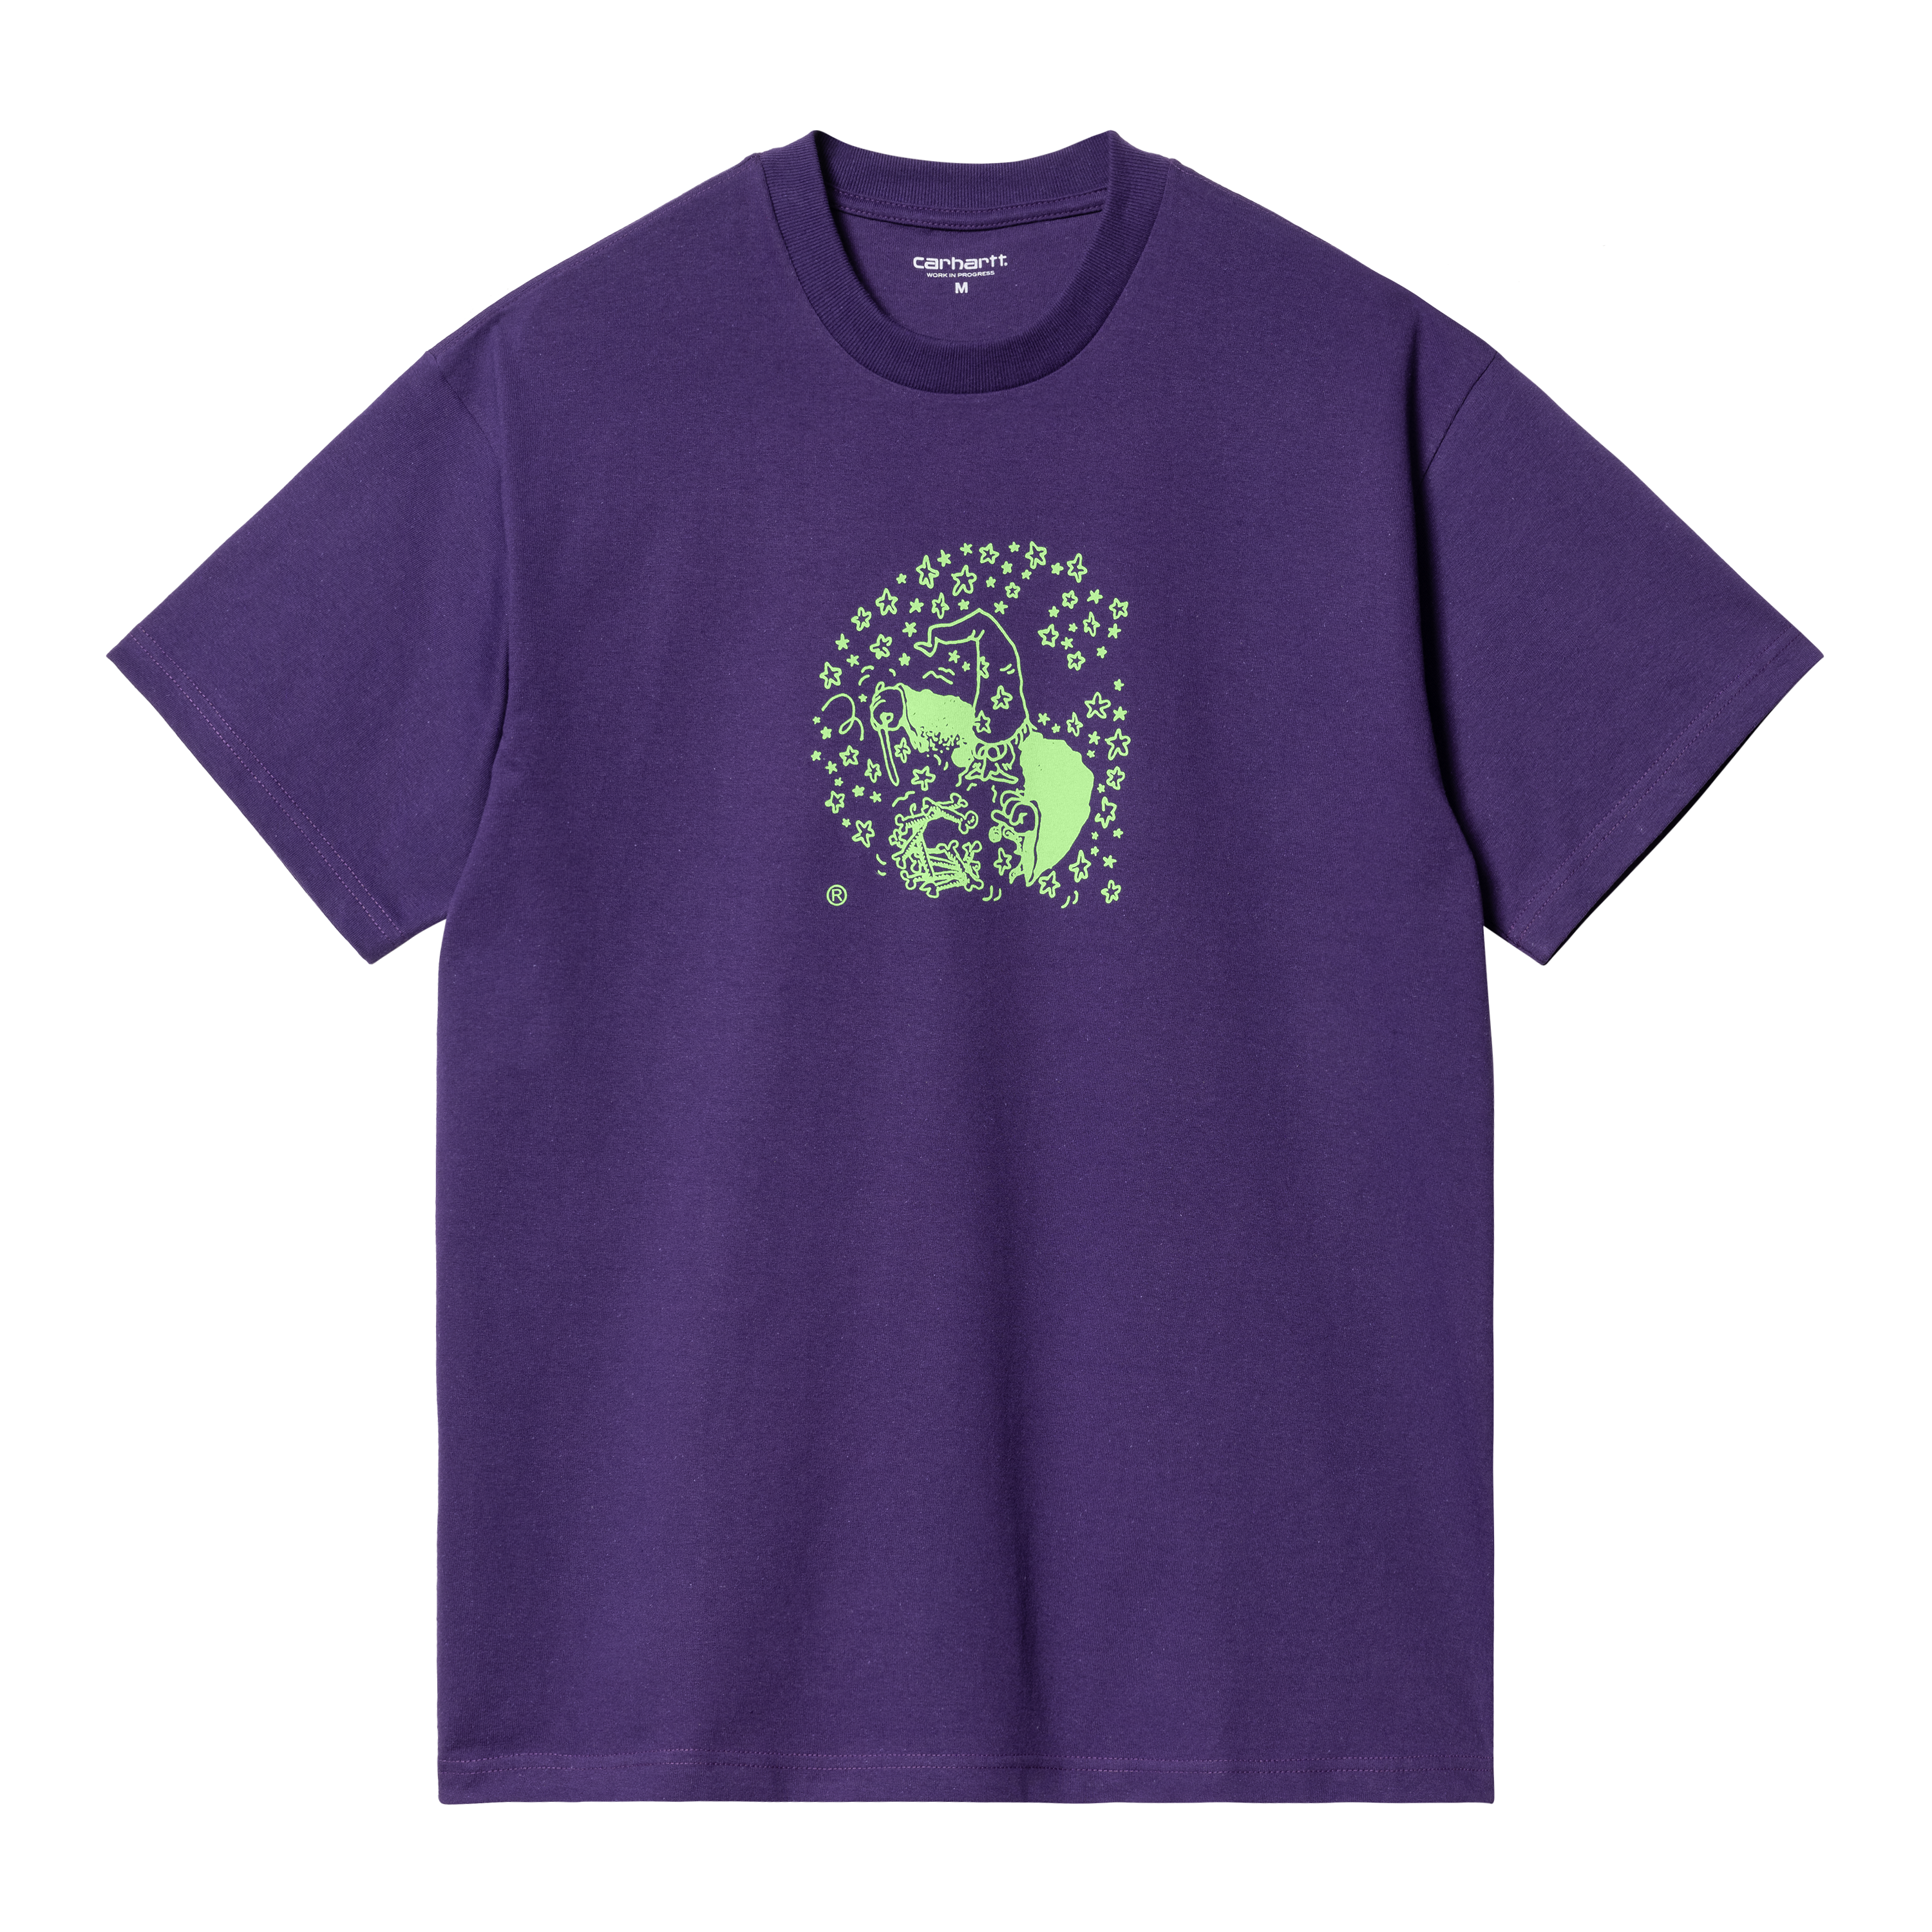 Carhartt WIP Short Sleeve Hocus Pocus T-Shirt in Purple